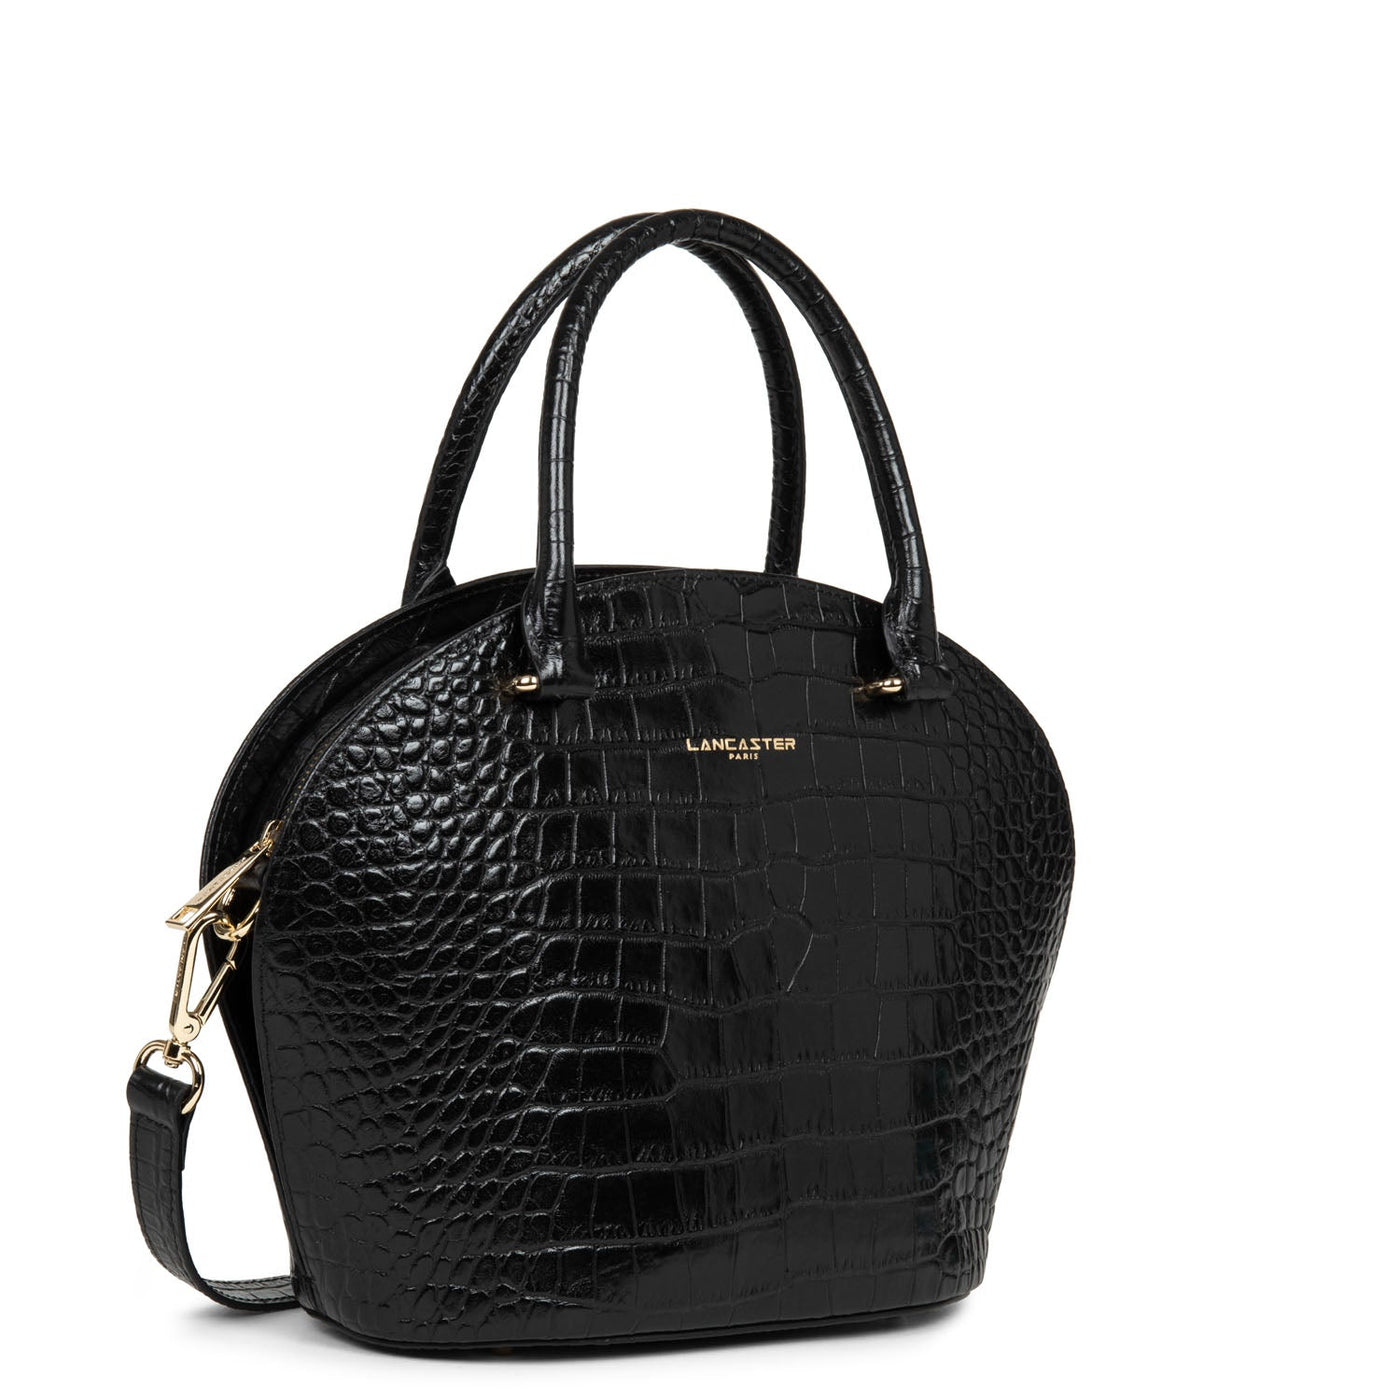 handbag - exotic croco cn #couleur_noir